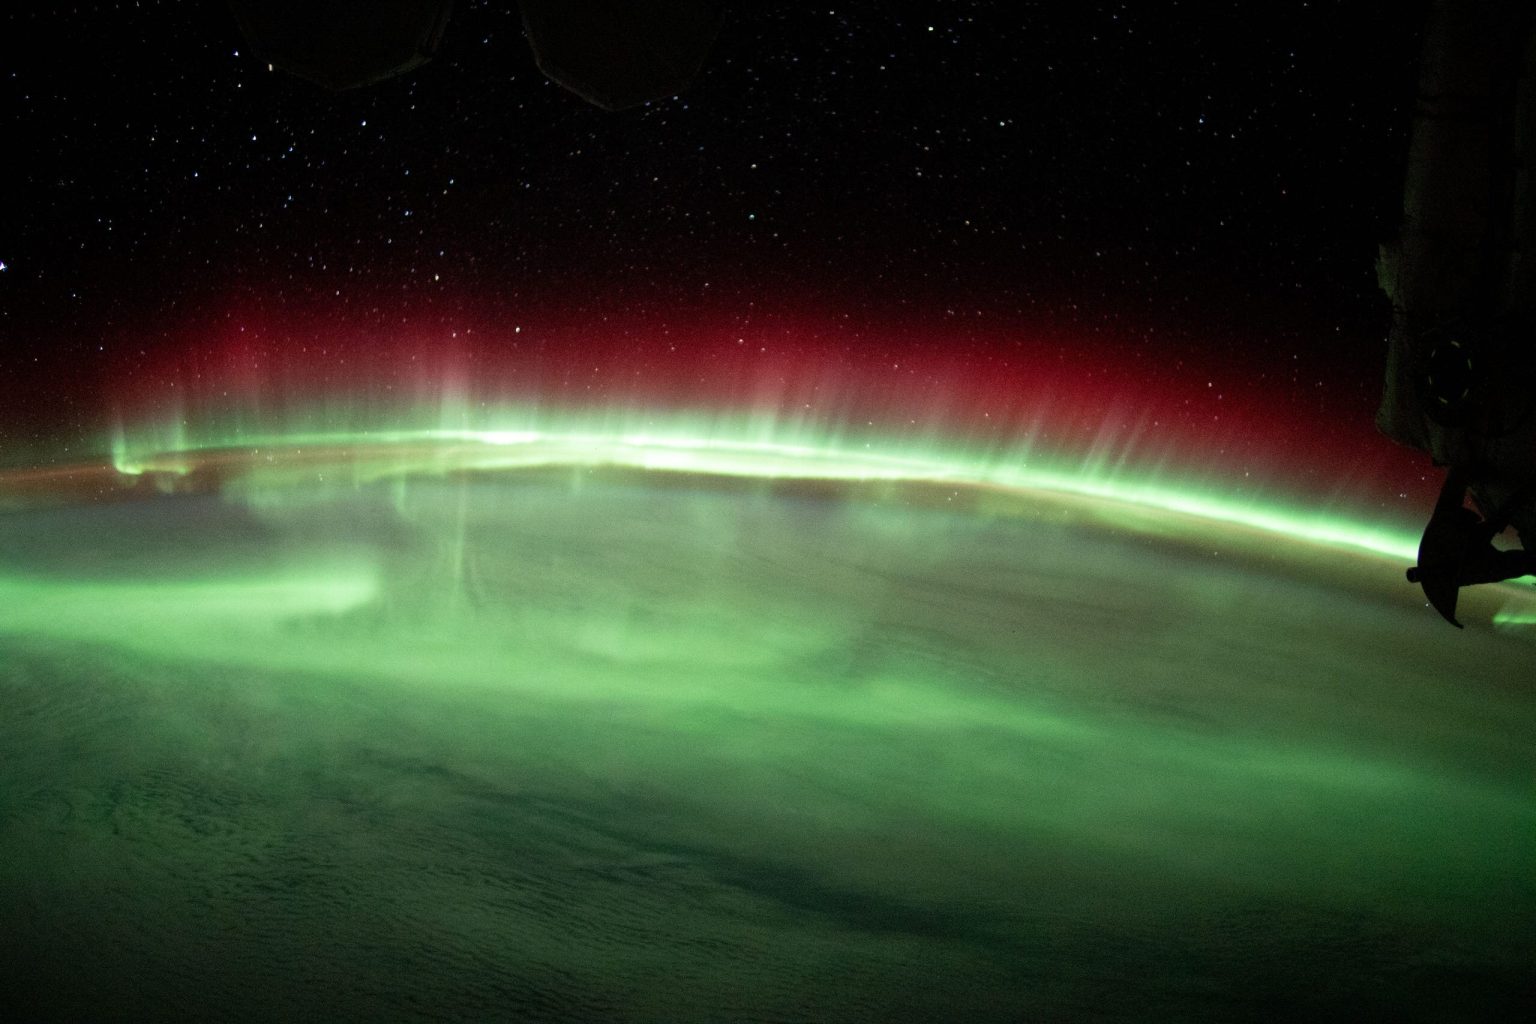 L’aurora vista dalla International Space Station (ISS) – Crediti: NASA/Bob Hines